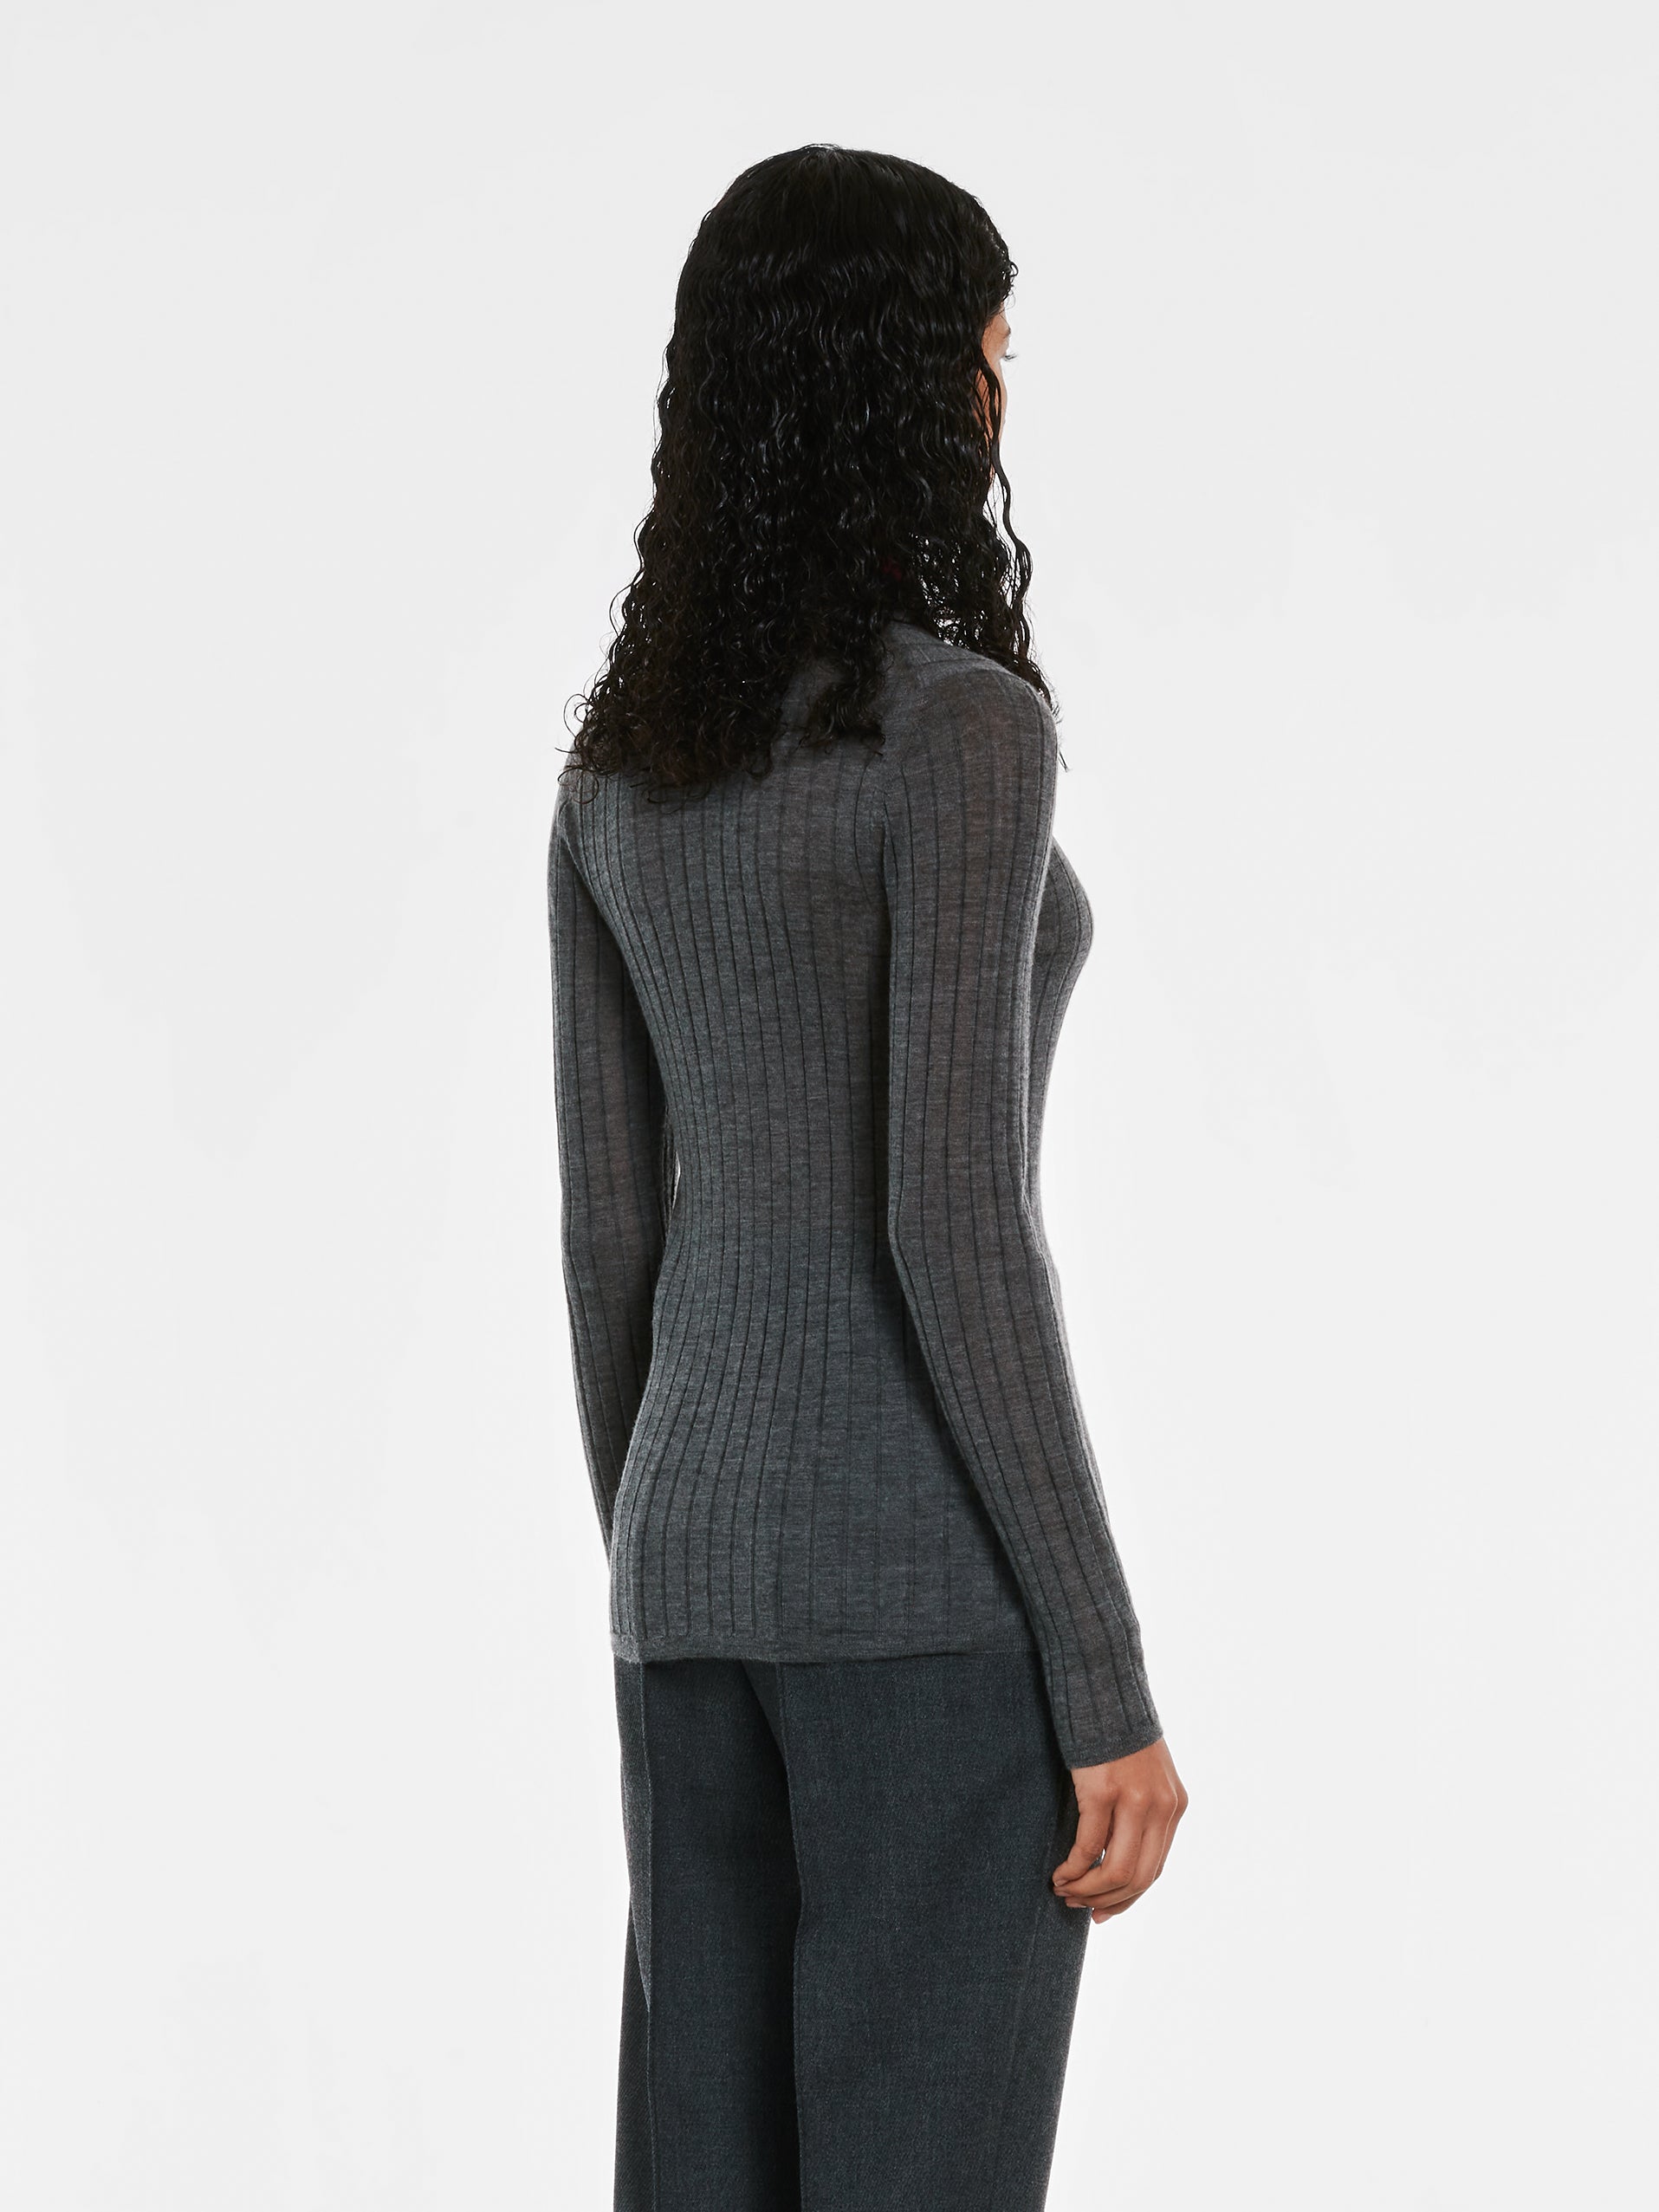 Prada - Women’s Cashmere and Silk Cardigan with Collar - (Slate Grey) view 3